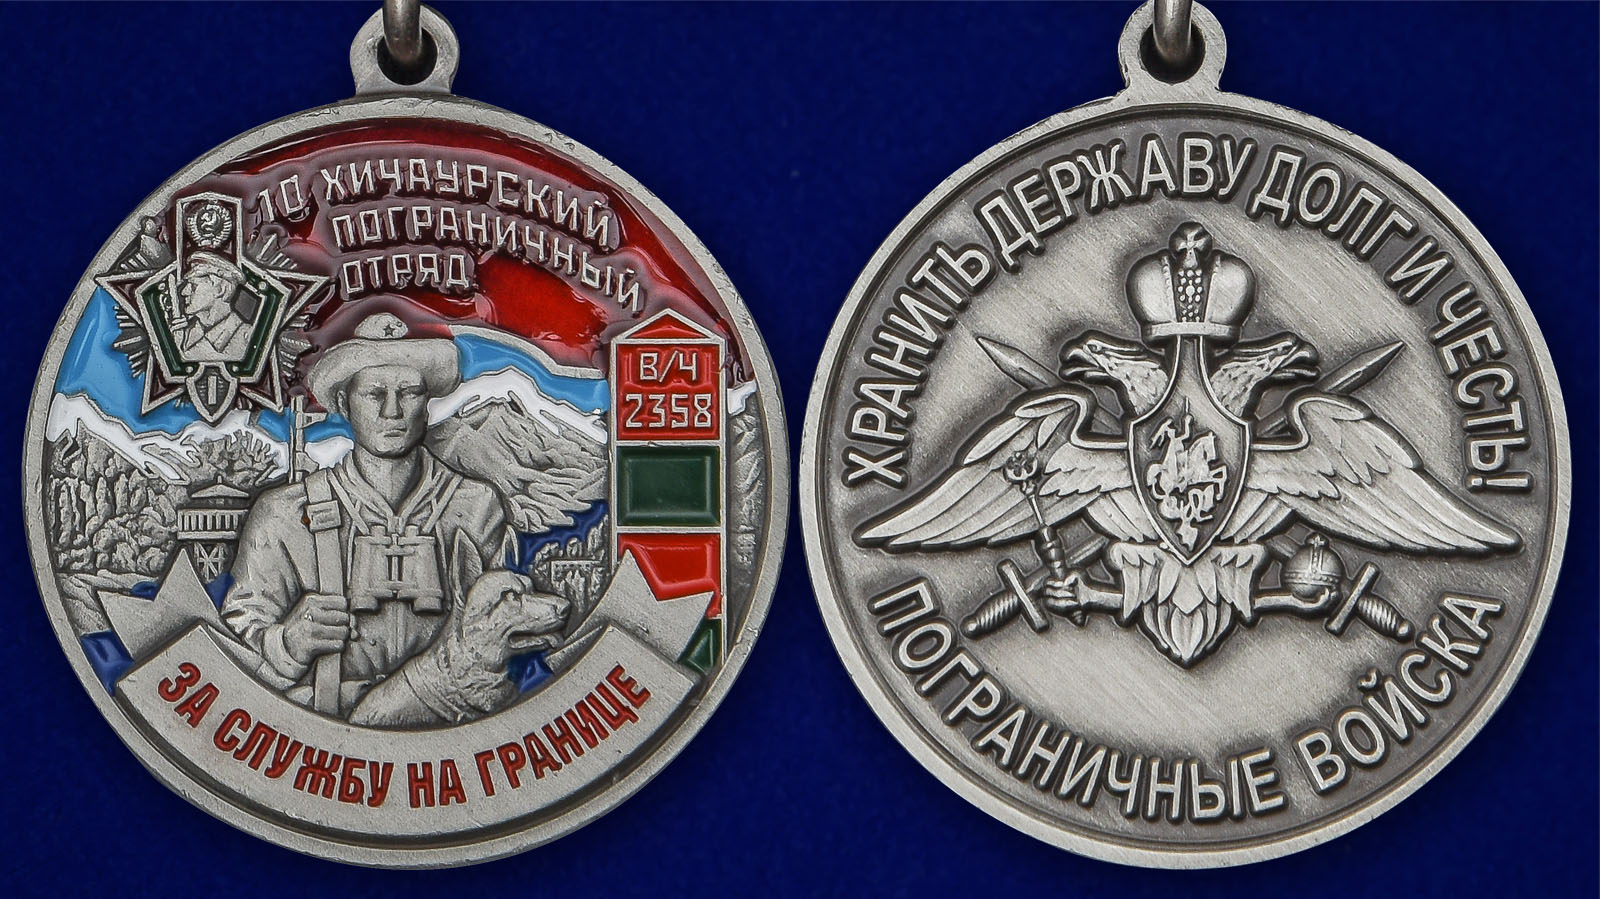 Медаль "За службу на границе" (10 Хичаурский ПогО) - аверс и реверс